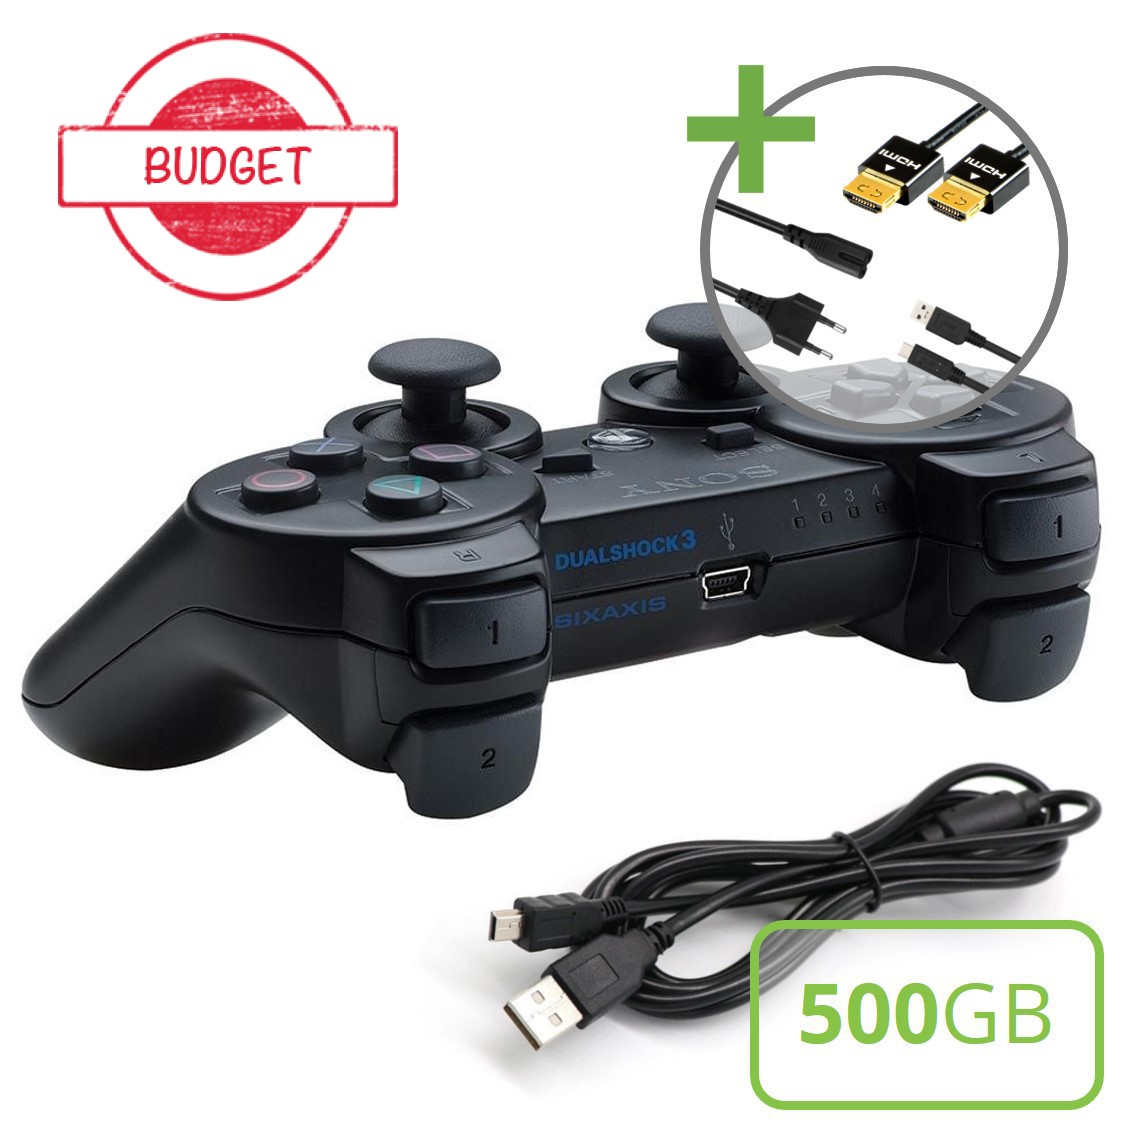 Sony PlayStation 3 Super Slim (500GB) Starter Pack - DualShock Edition - Budget - Playstation 3 Hardware - 4